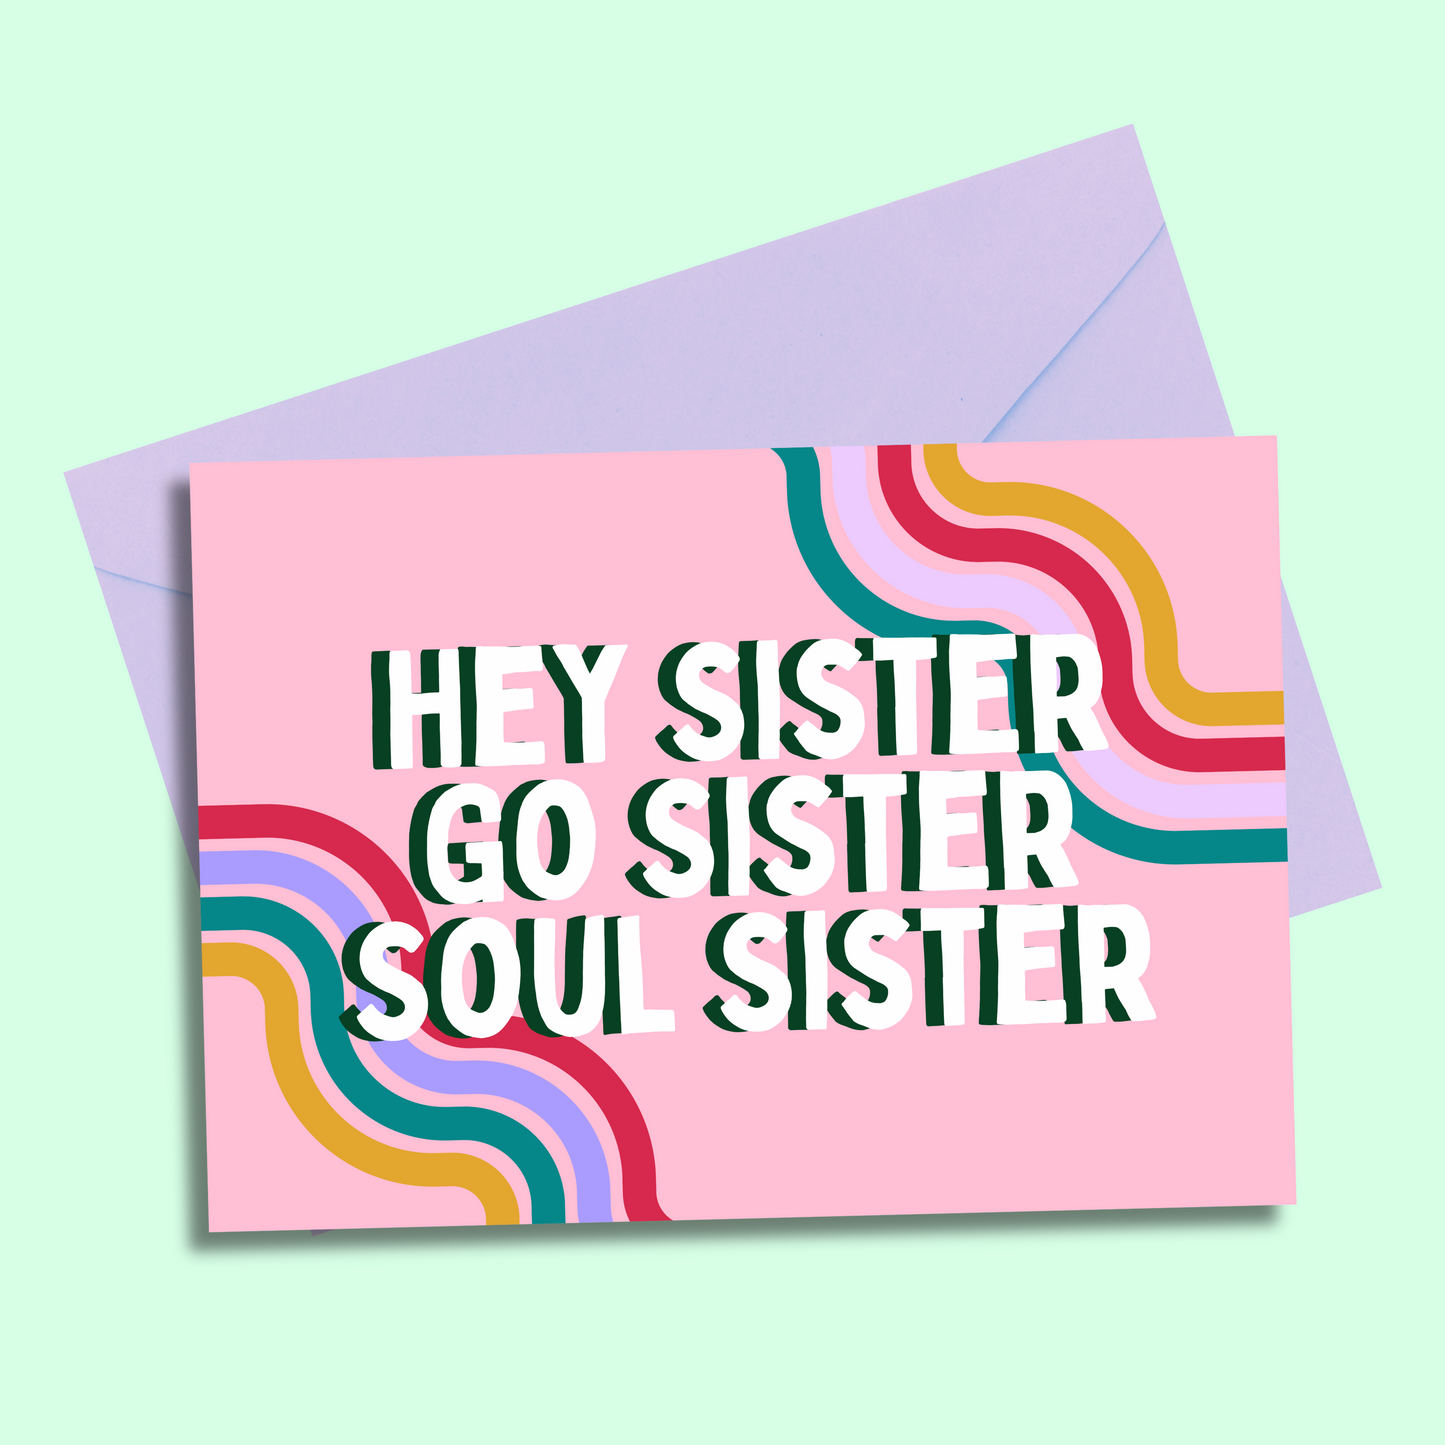 Hey soul sister (5x7” print/card)